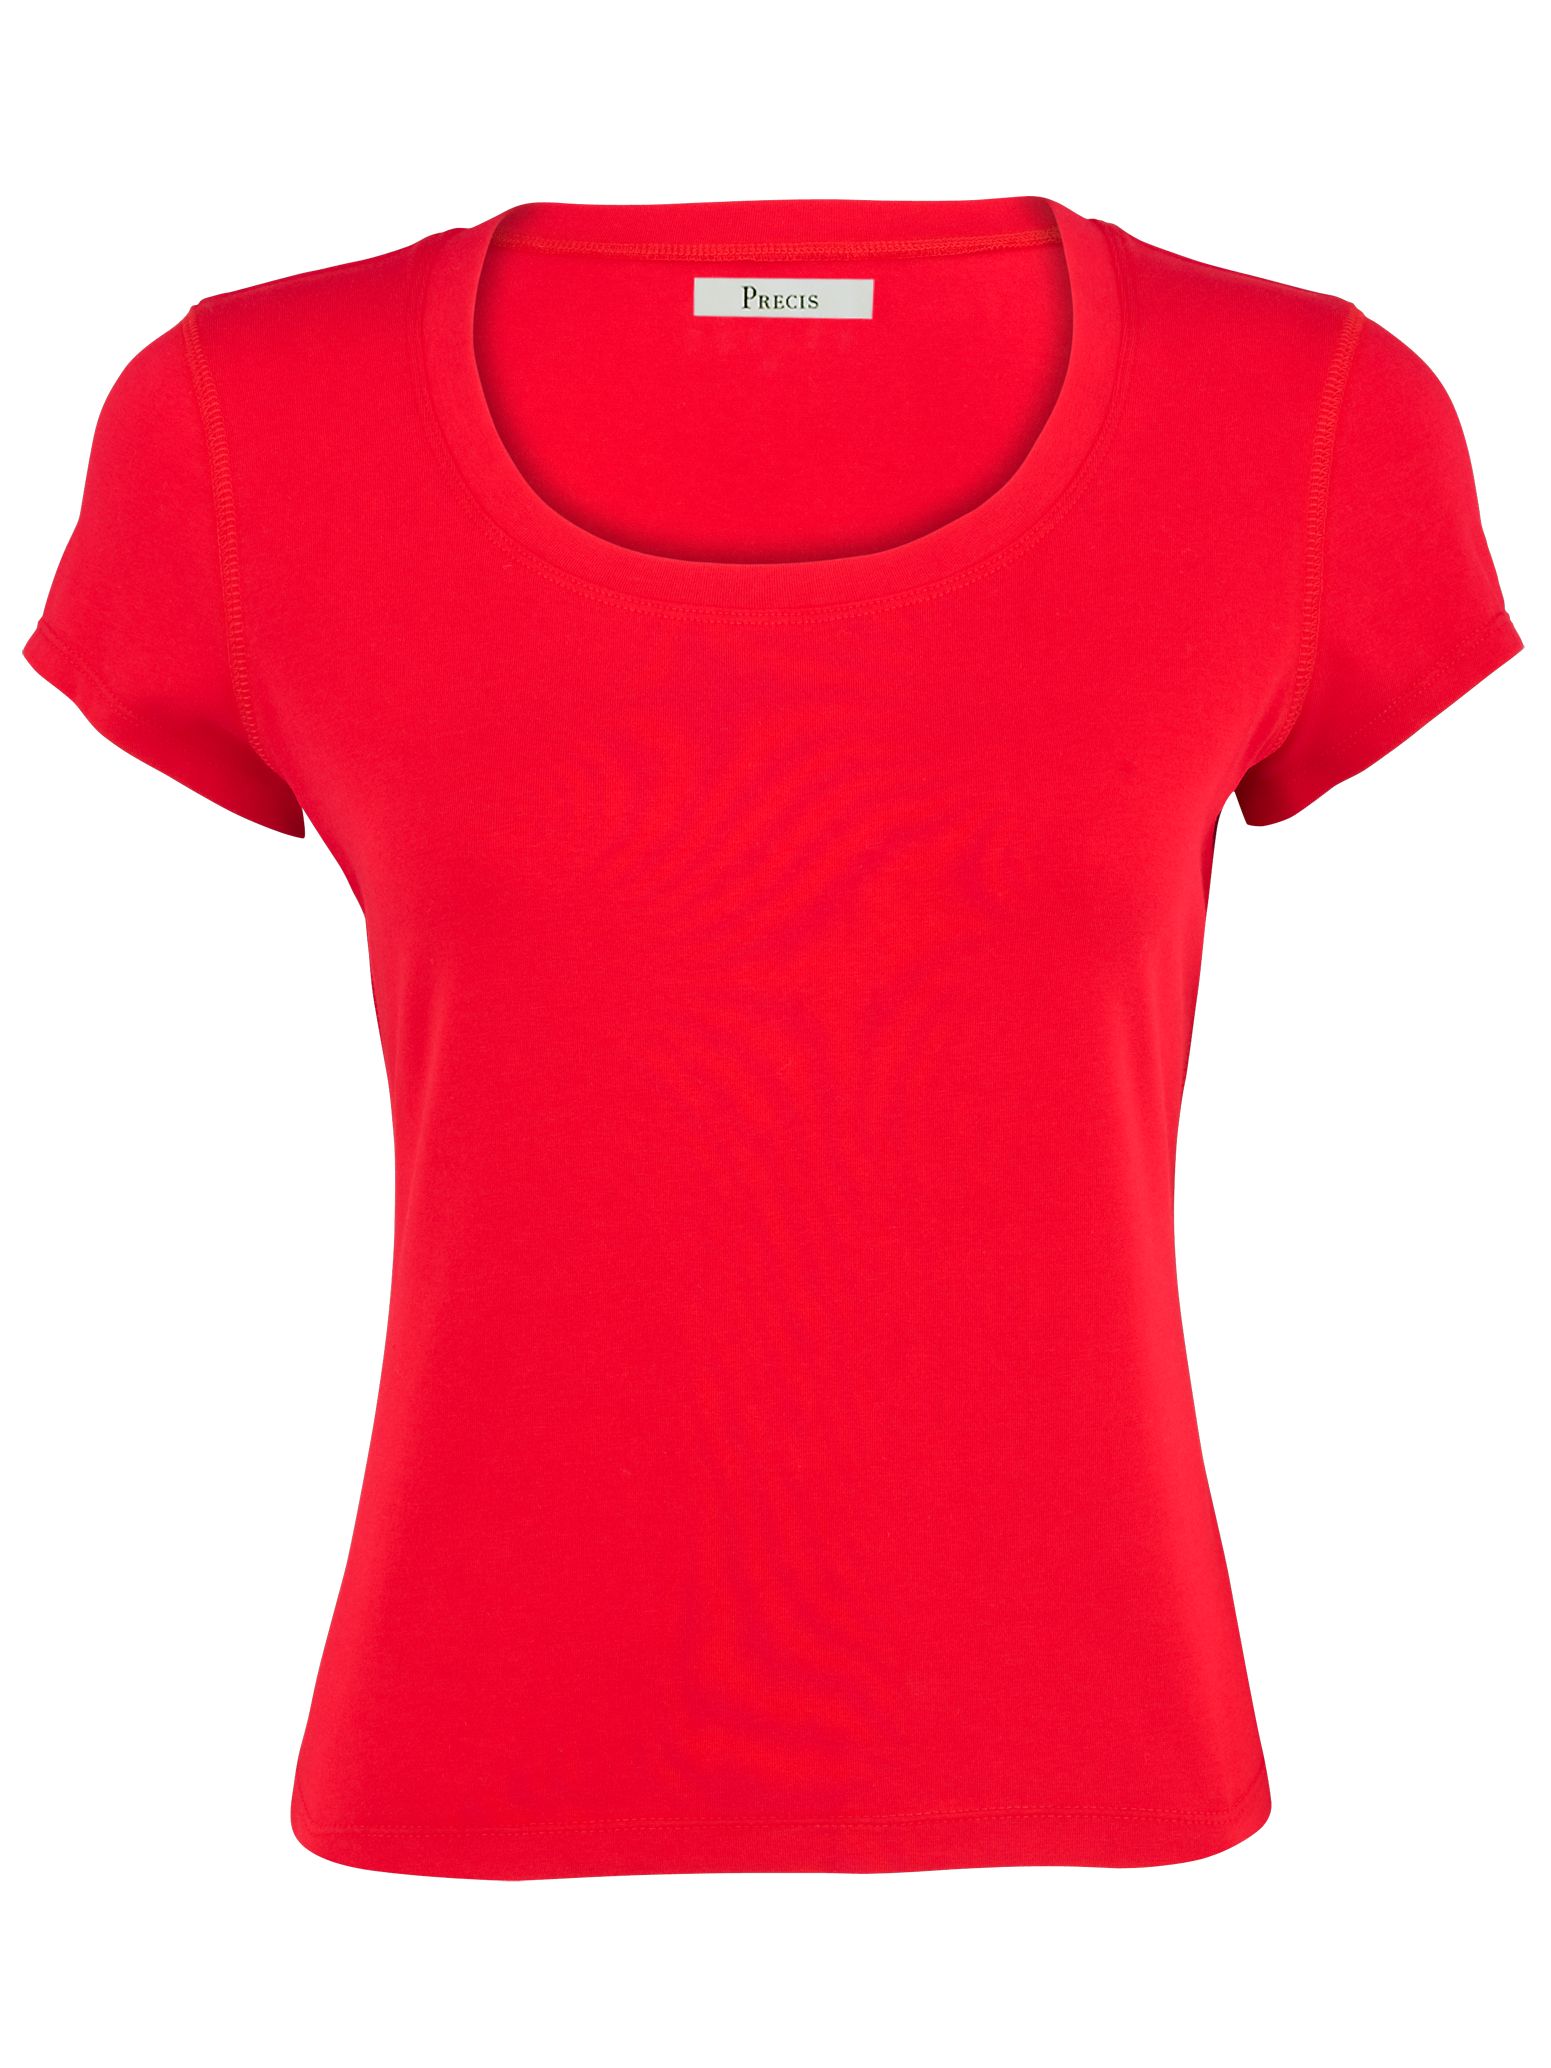 Cap Sleeve T-Shirt, Red